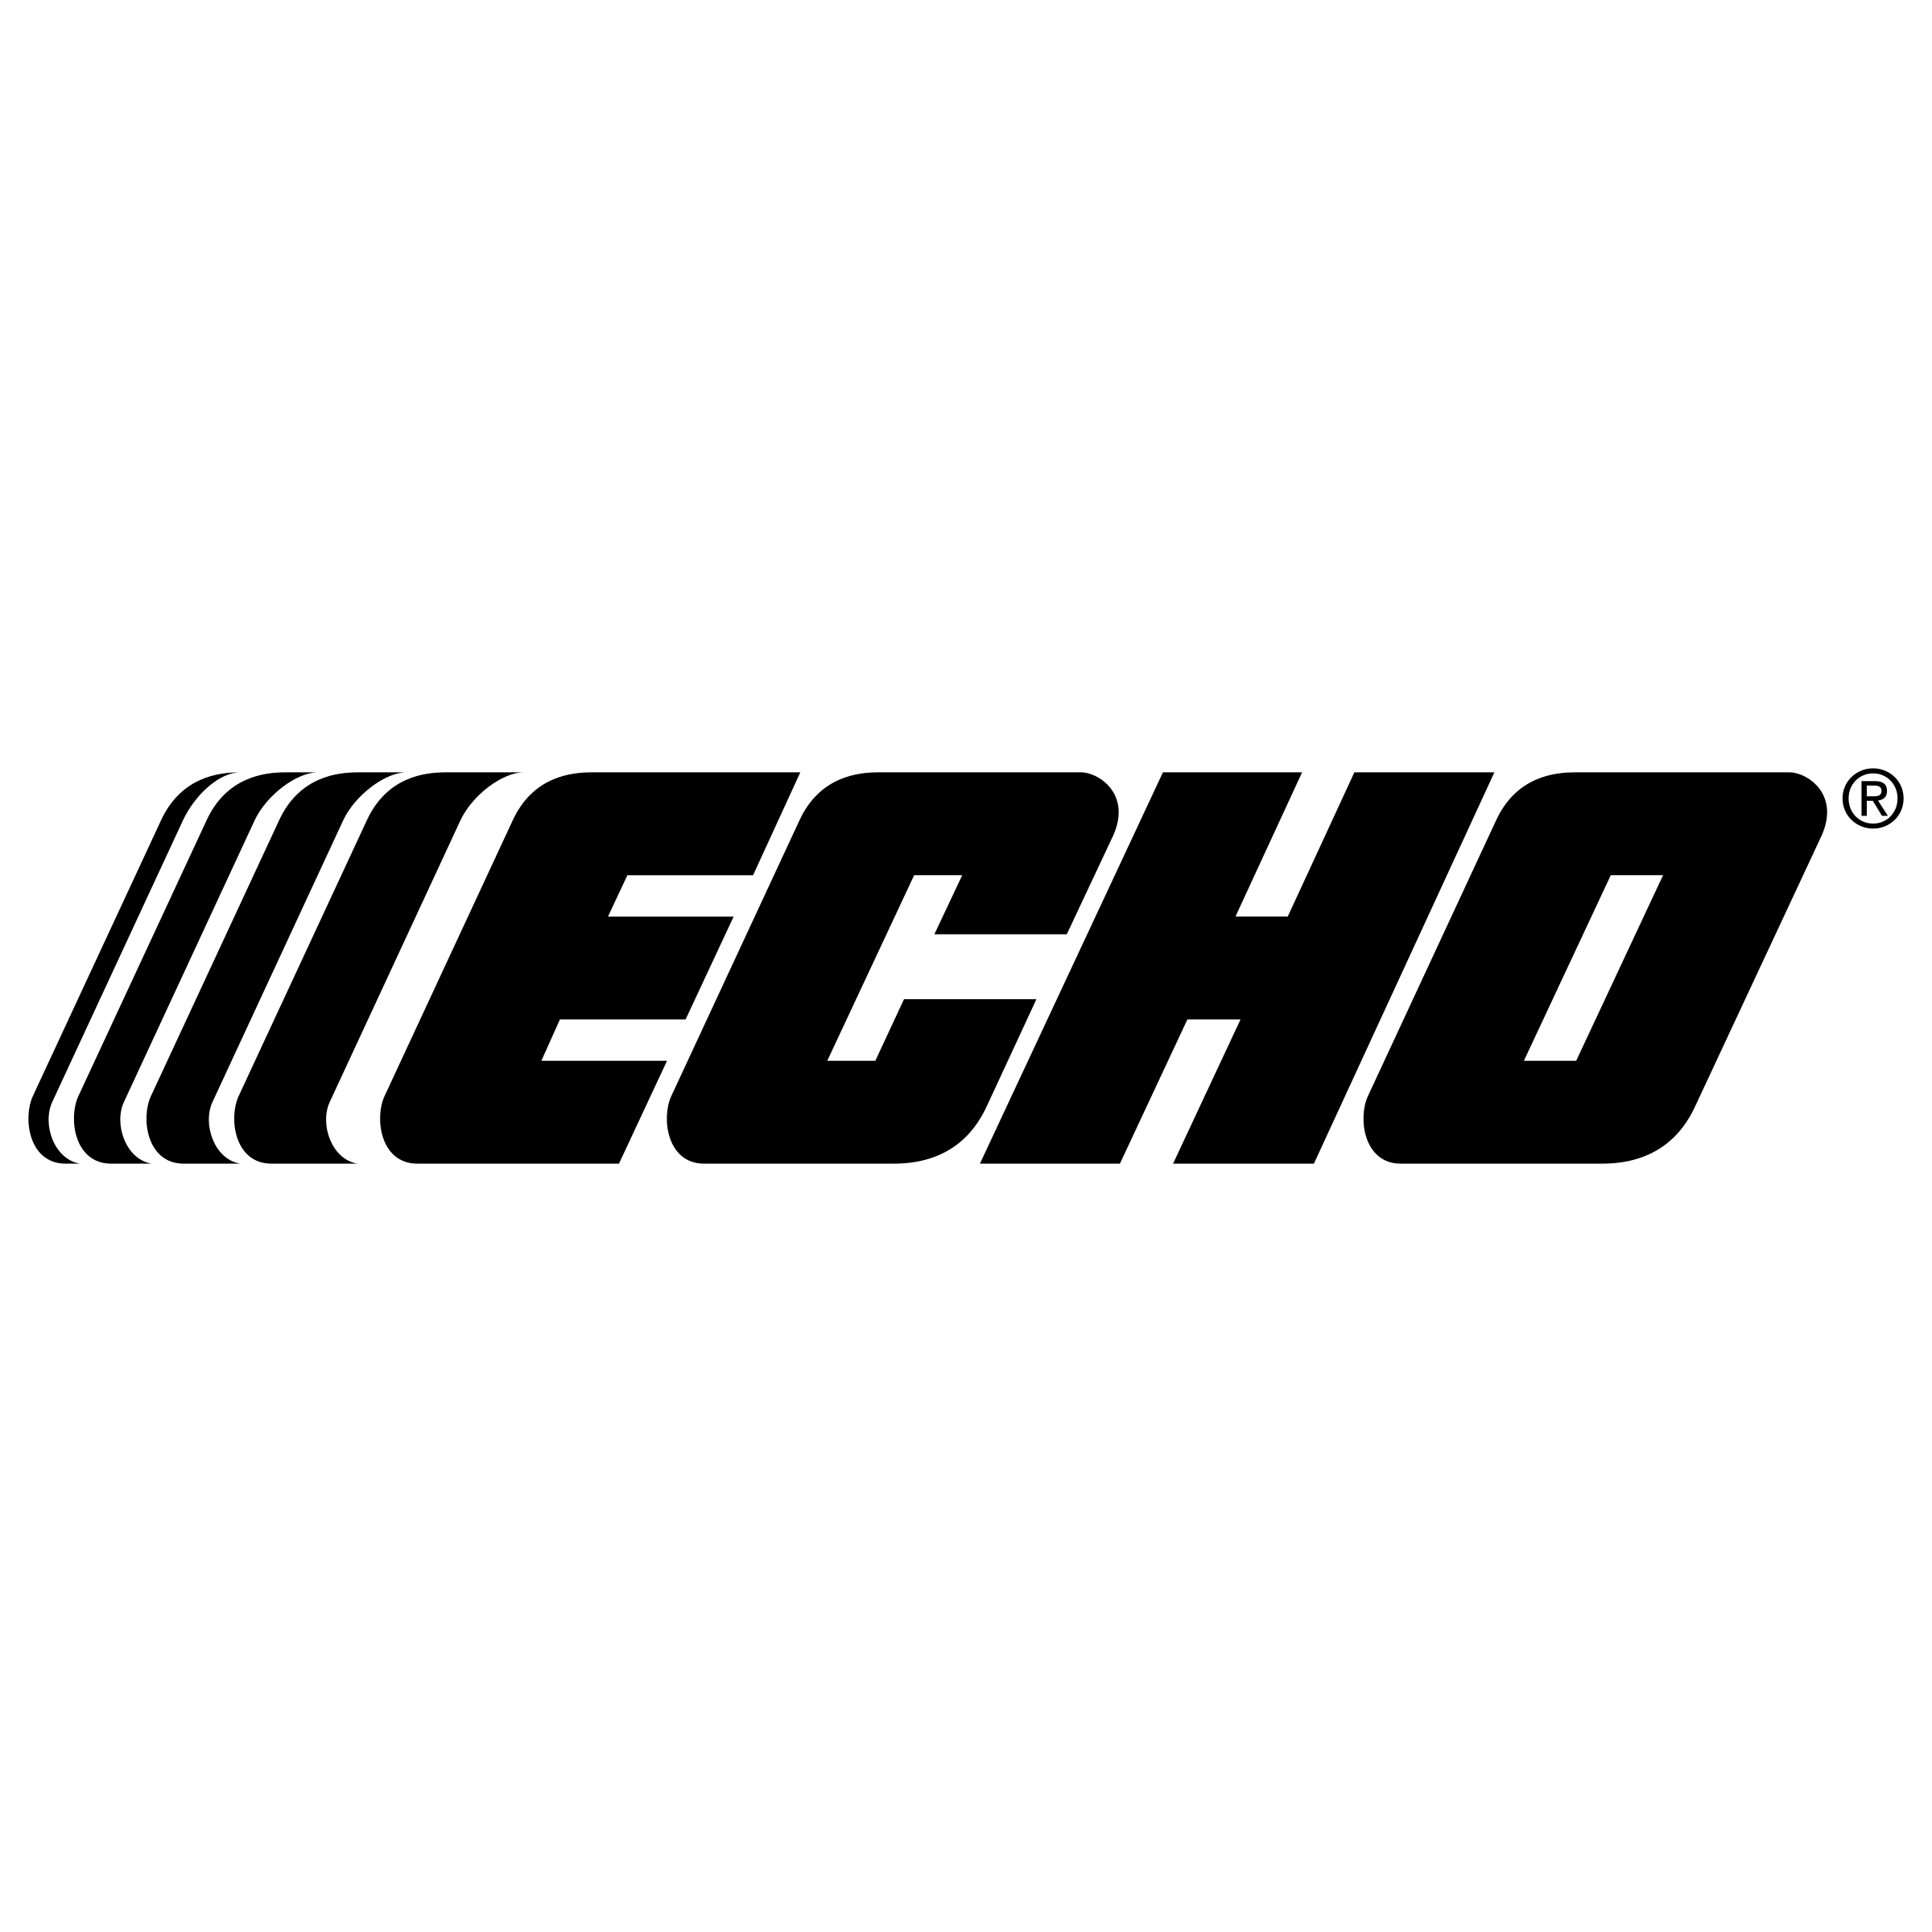 Echo Logo - Echo Logo PNG Transparent & SVG Vector - Freebie Supply